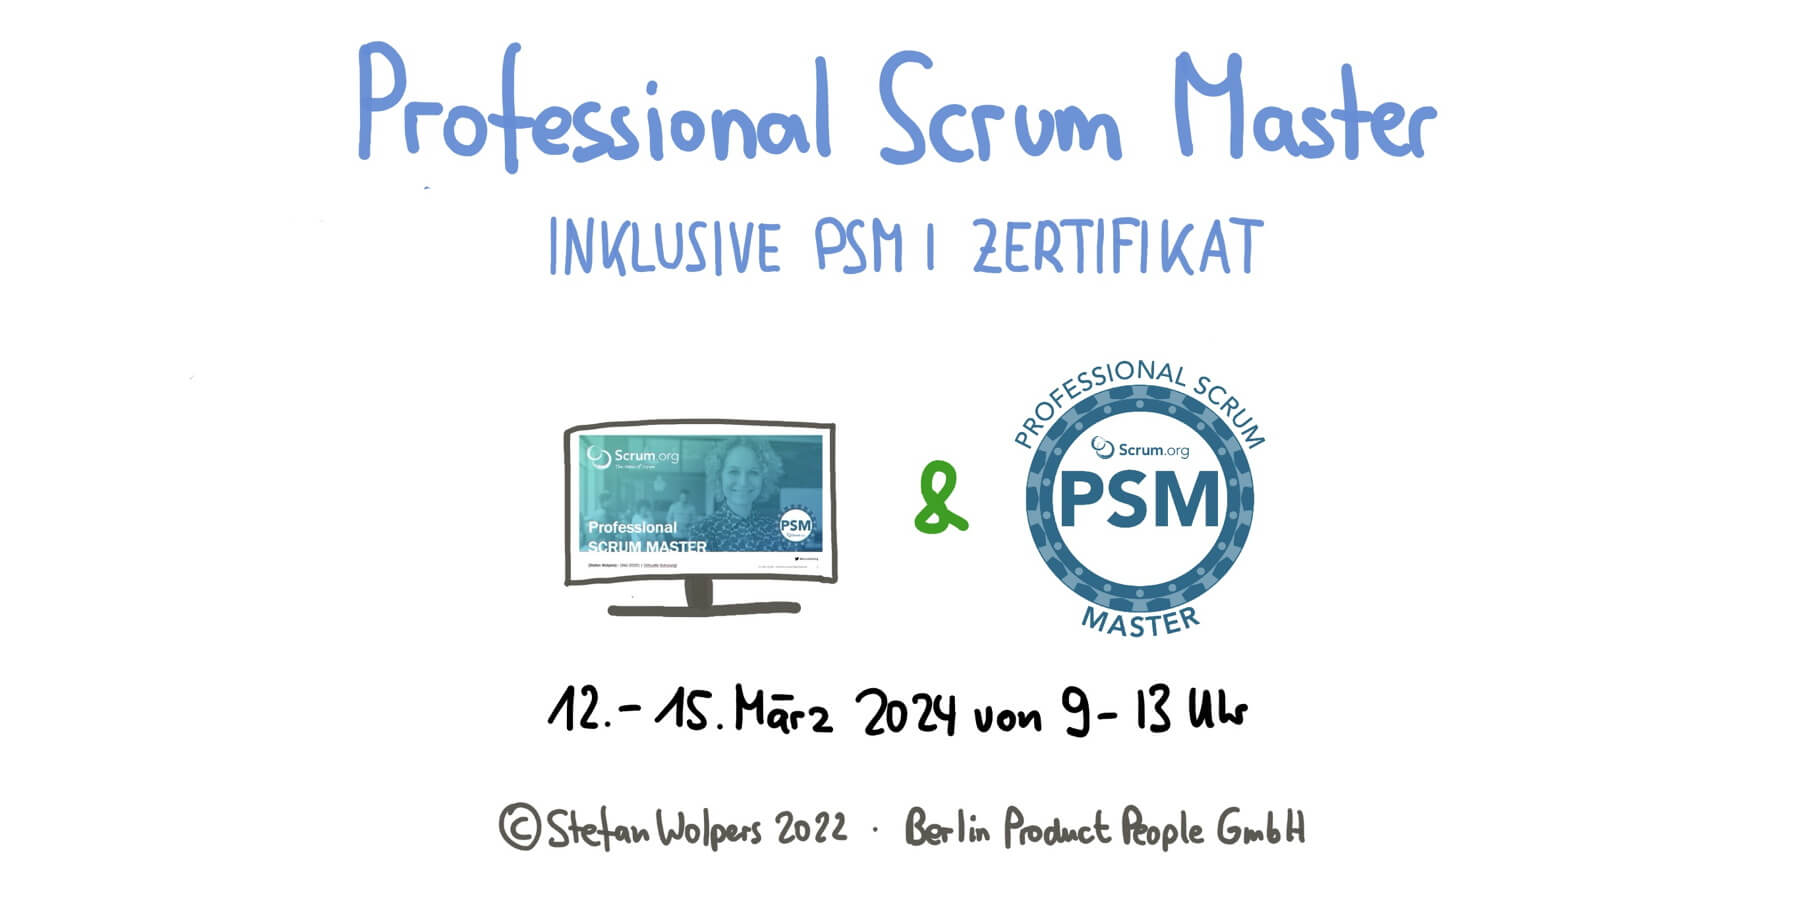 Professional Scrum Master Schulung mit PSM I Zertifikat vom 12. bis 15. März 202 — Berlin-Product-People.com